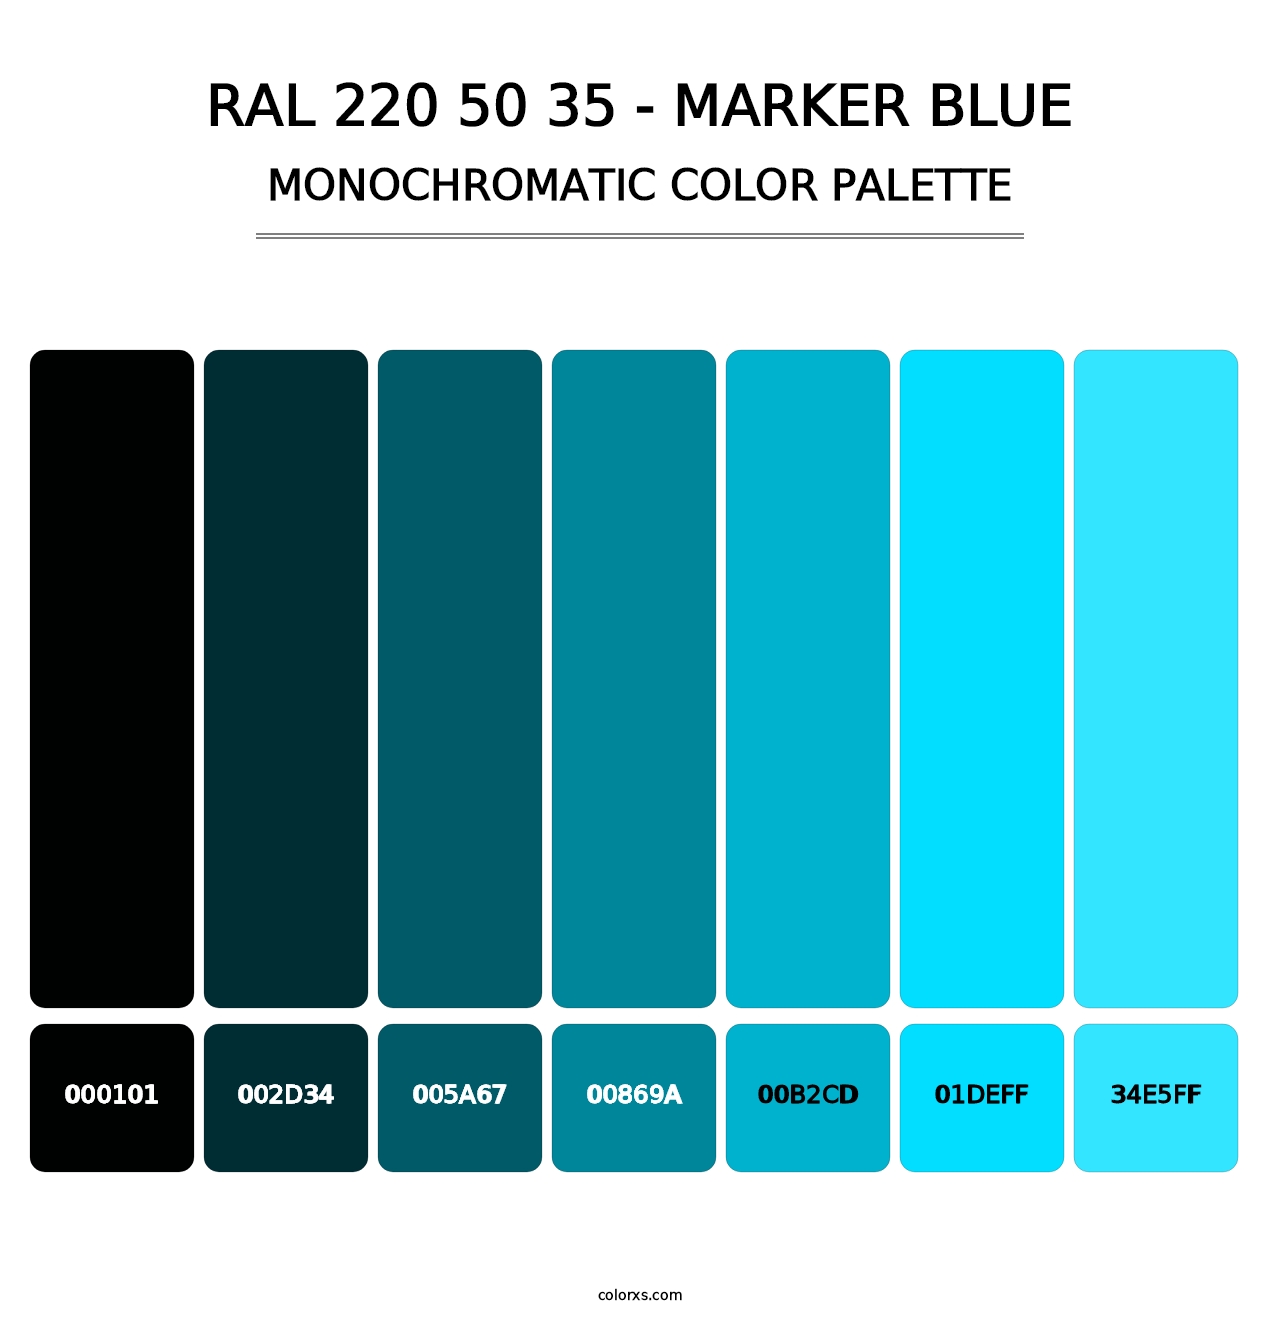 RAL 220 50 35 - Marker Blue - Monochromatic Color Palette